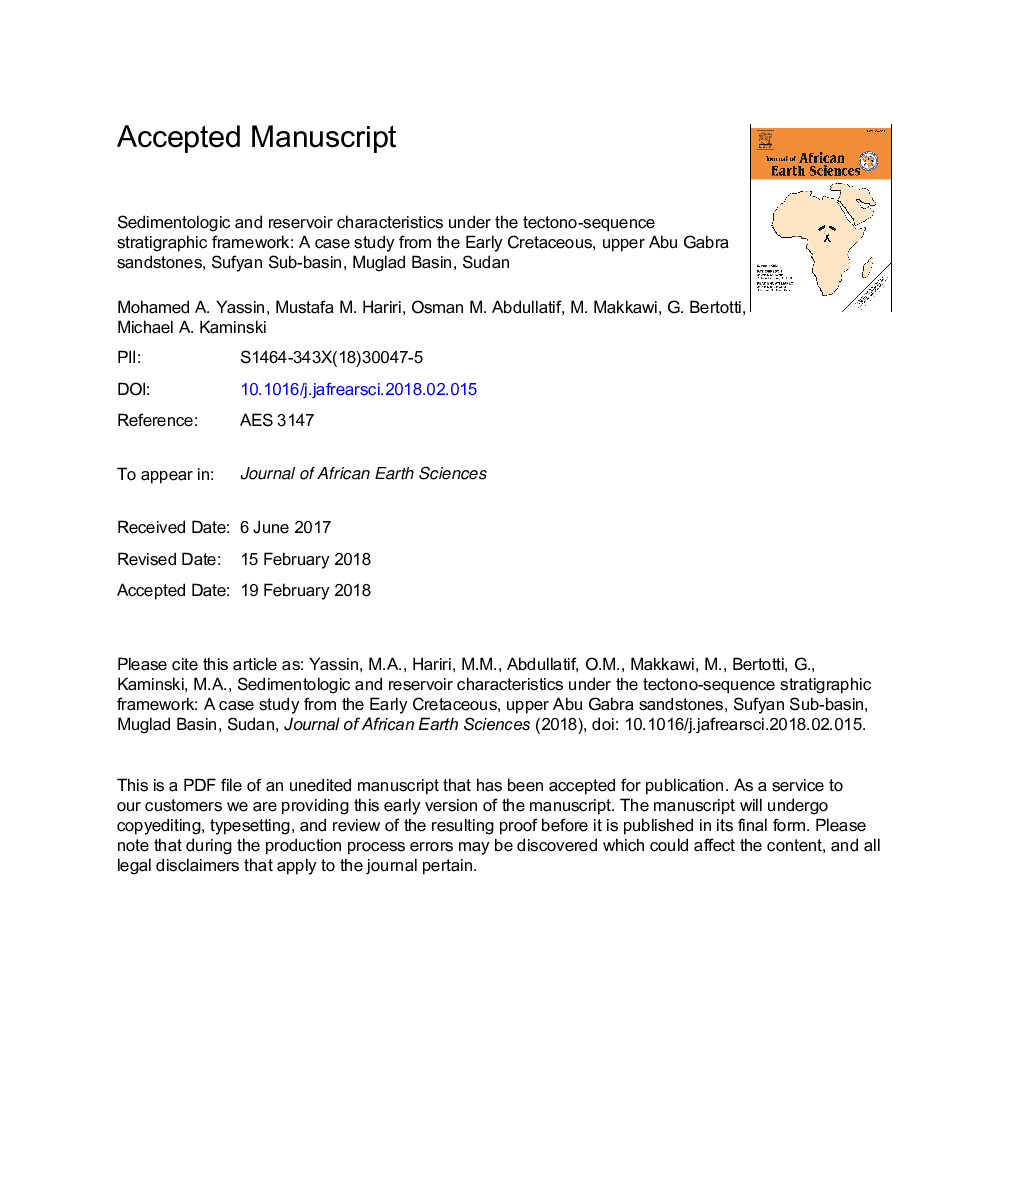 Sedimentologic and reservoir characteristics under a tectono-sequence stratigraphic framework: A case study from the Early Cretaceous, upper Abu Gabra sandstones, Sufyan Sub-basin, Muglad Basin, Sudan